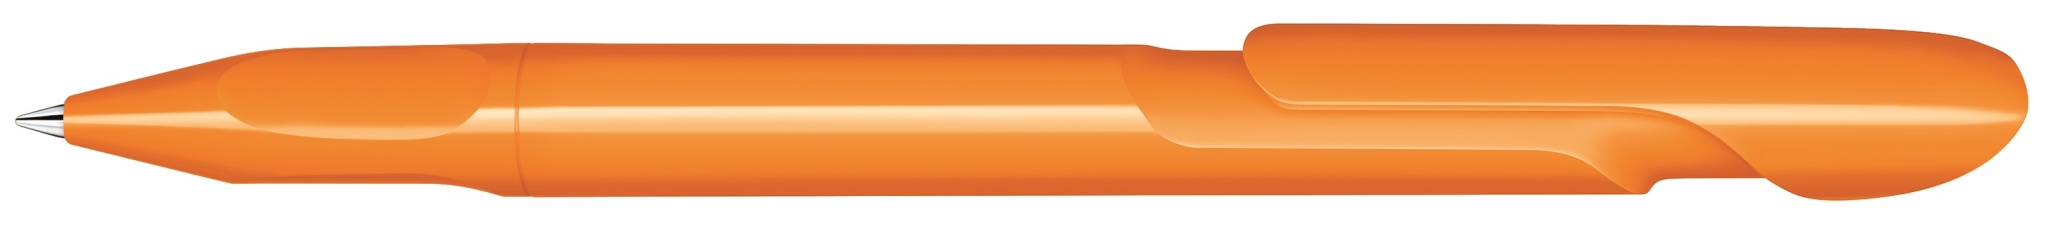  3273 Evoxx Polished Recycled оранжевый 151, оранжевый, пластик